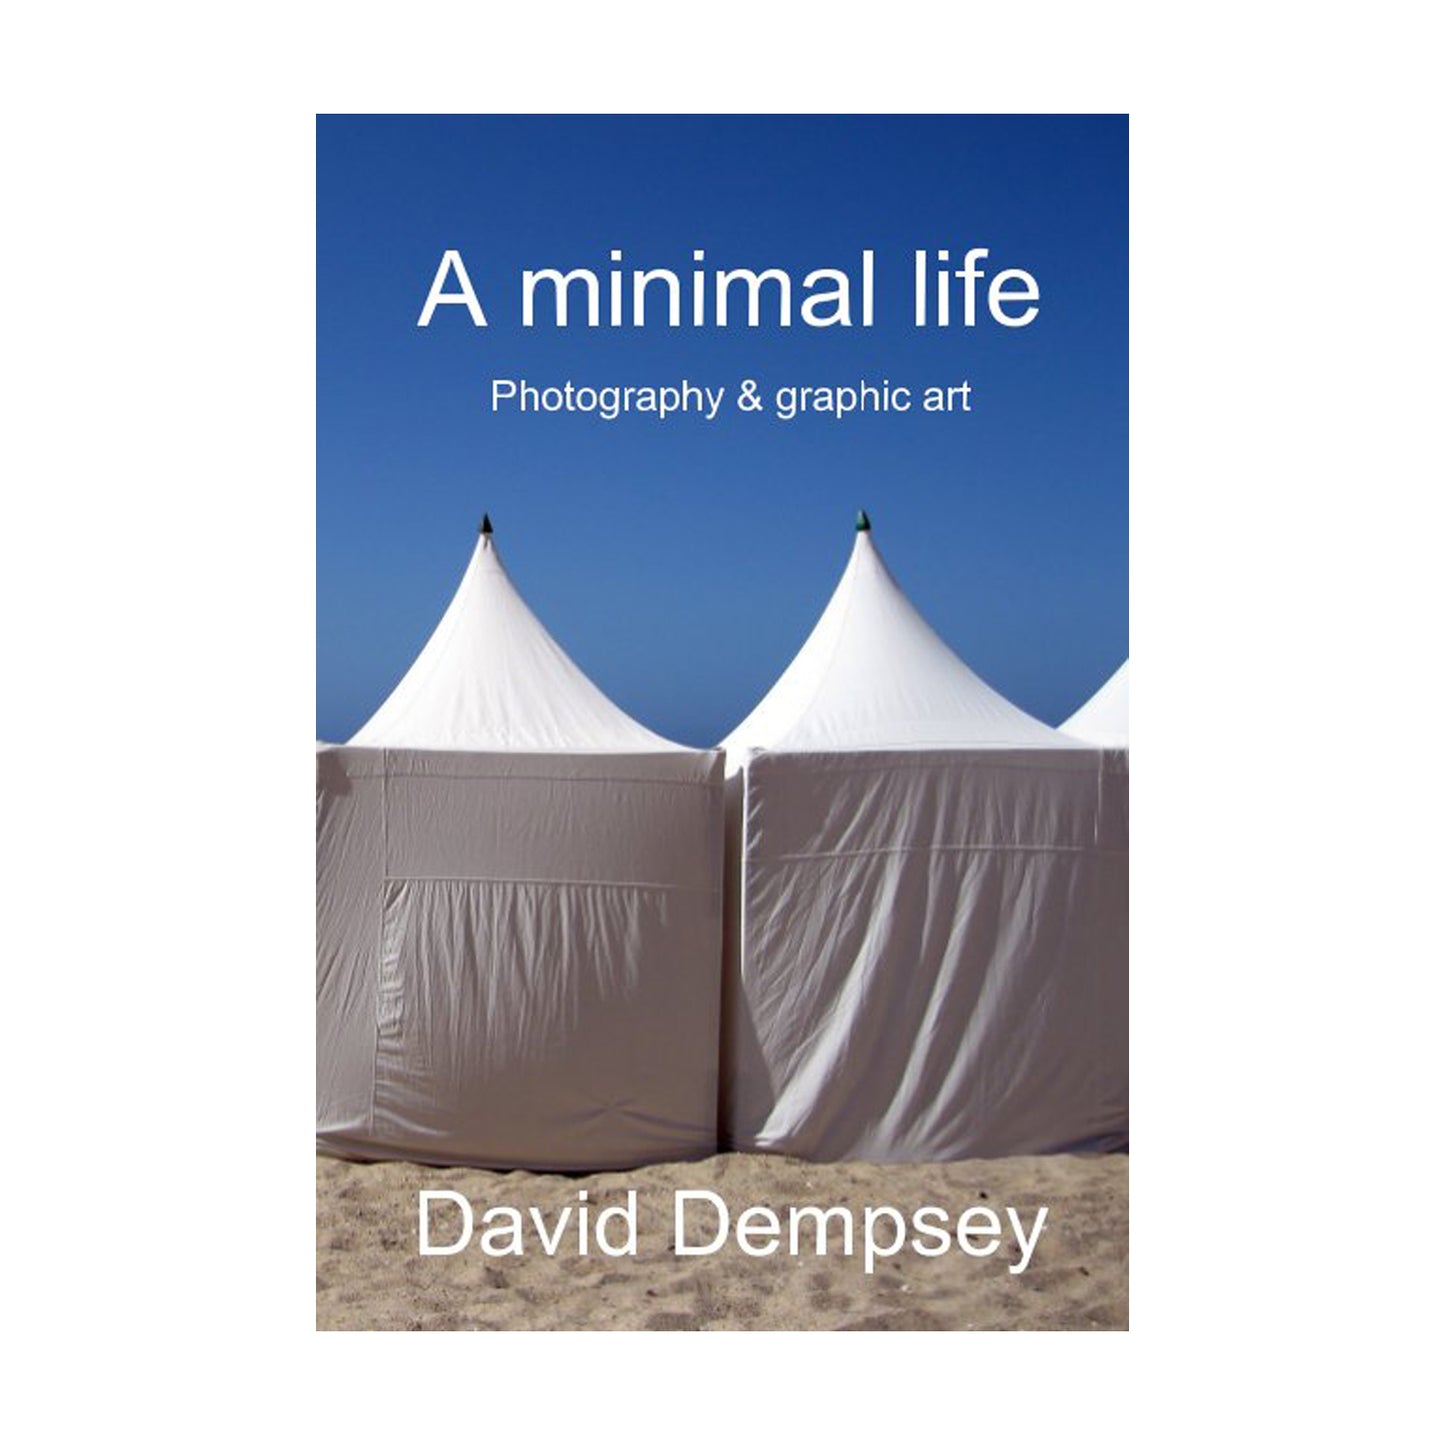 A Minimal Life by David Dempsey